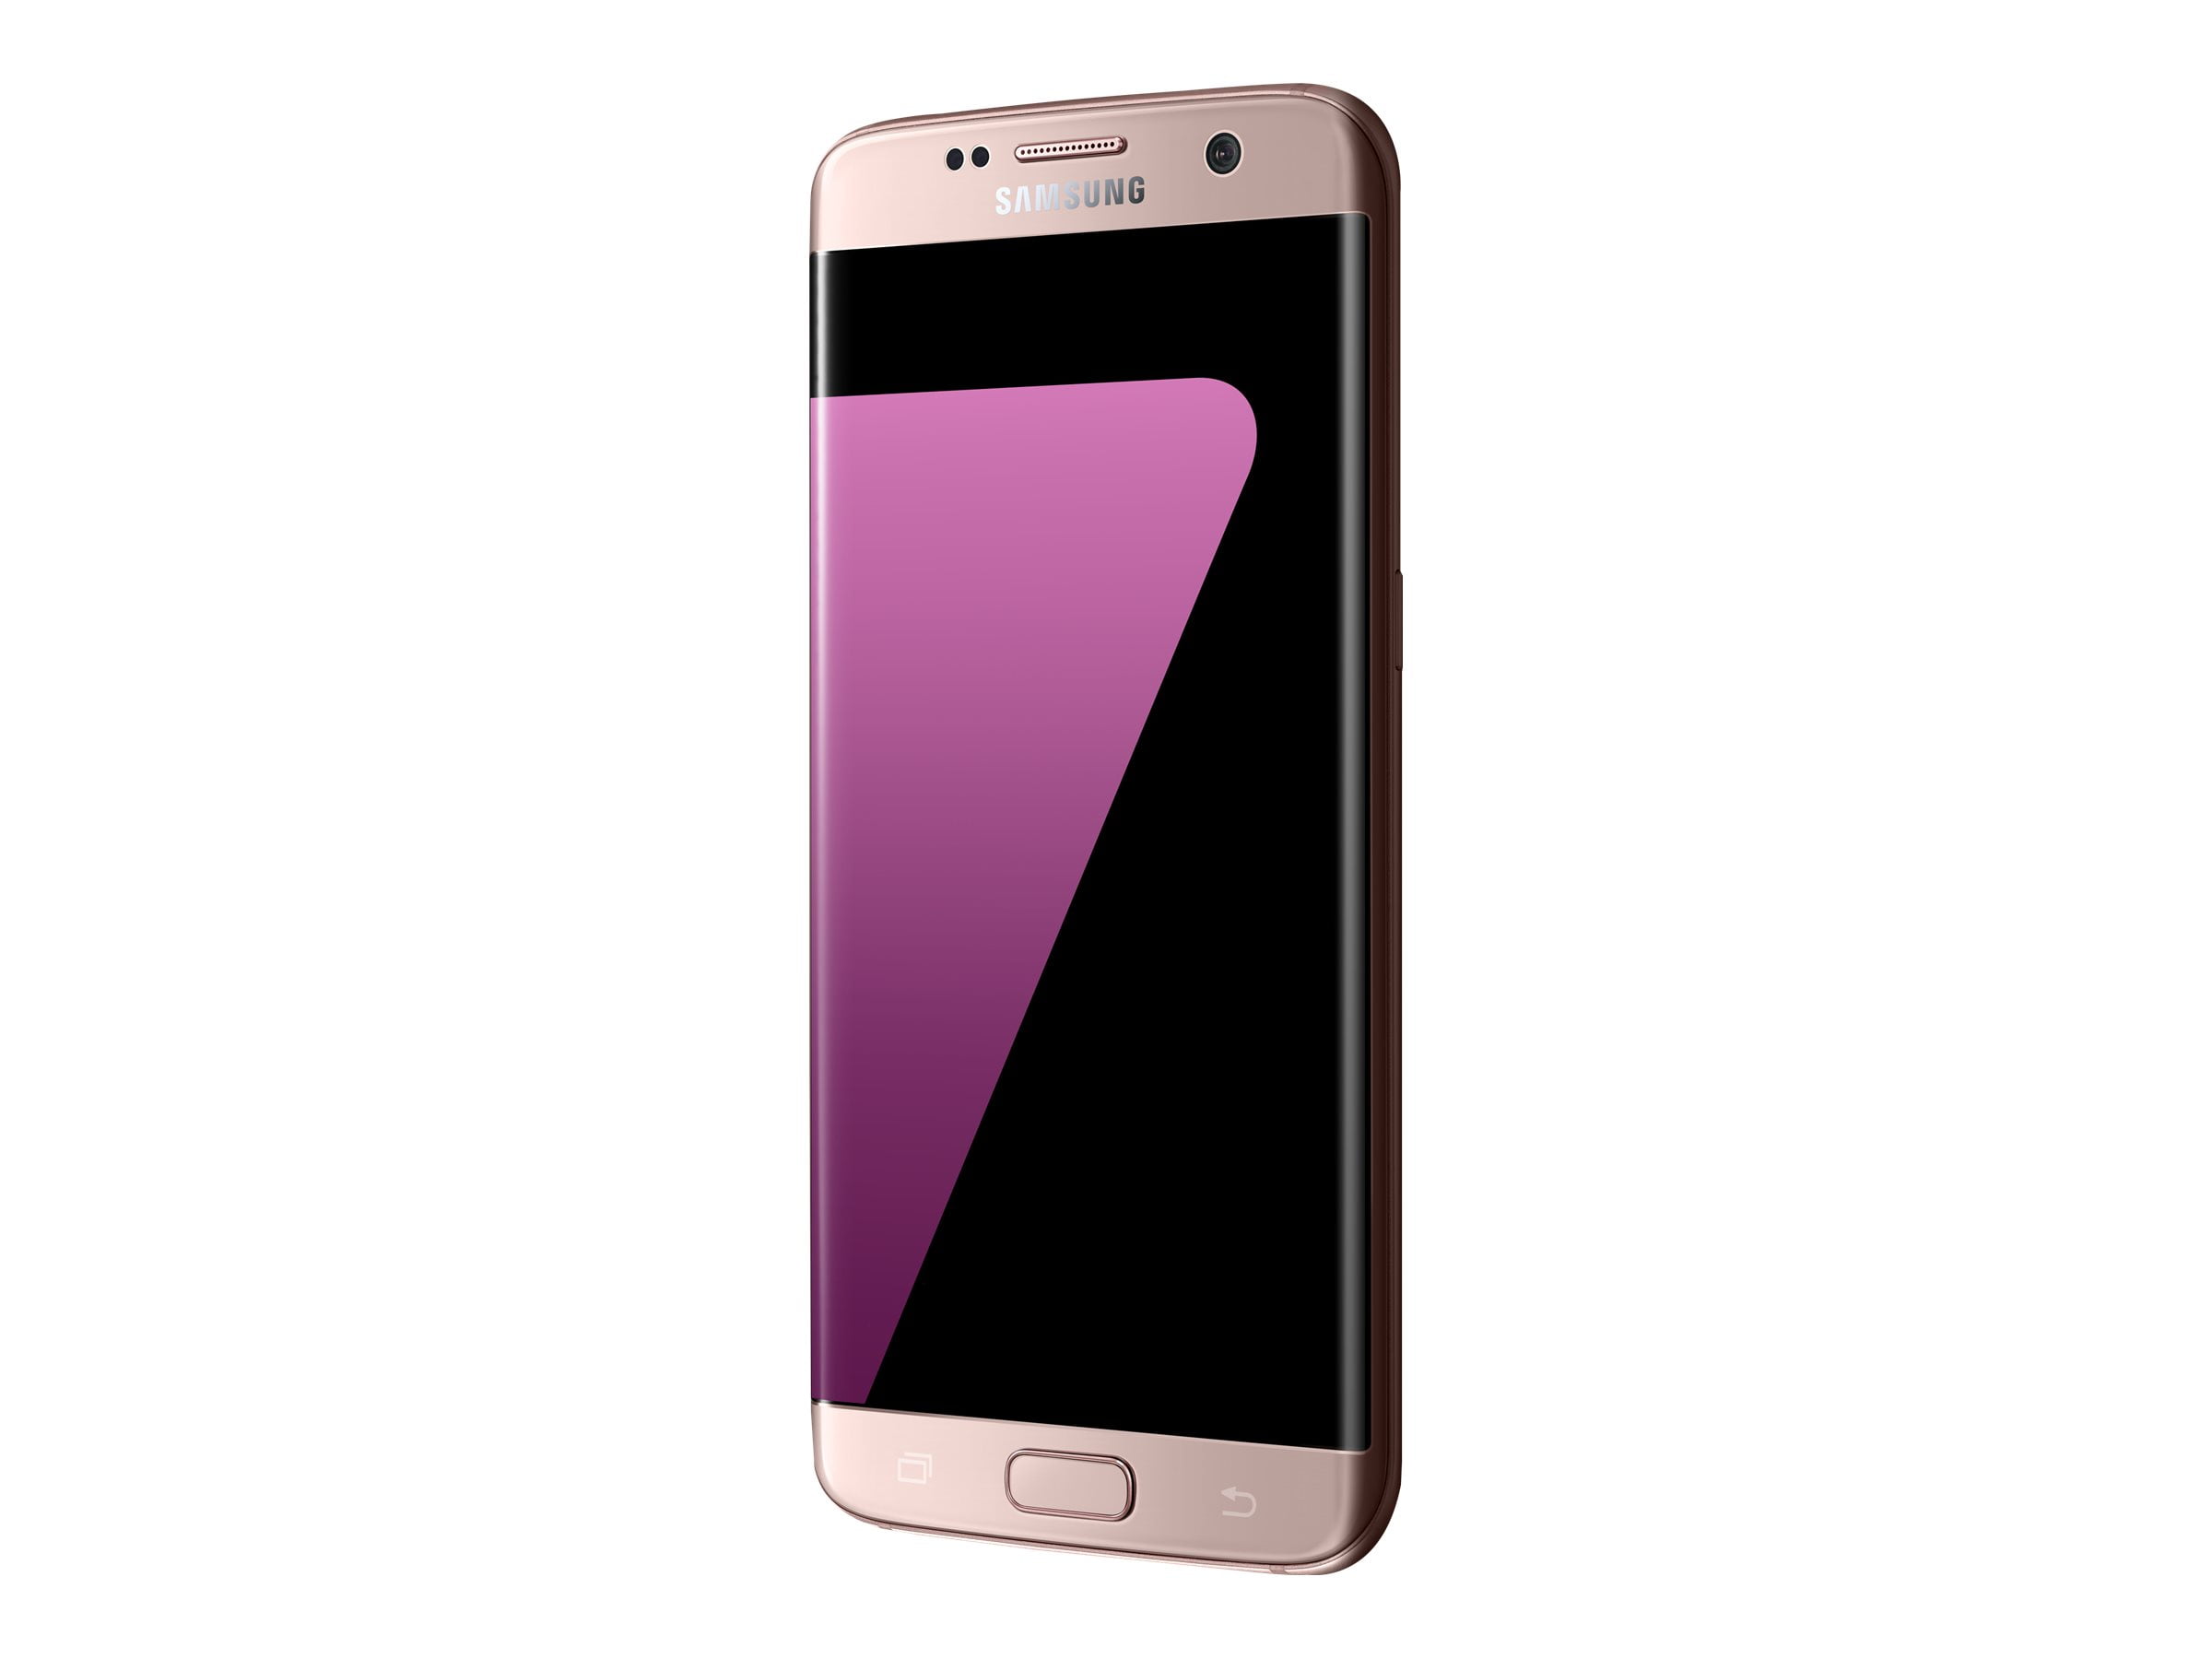 kousen Glans Luchtvaart Samsung Galaxy S7 edge SM-G935A 32GB AT&T 5.5" Smartphone New other -  Walmart.com